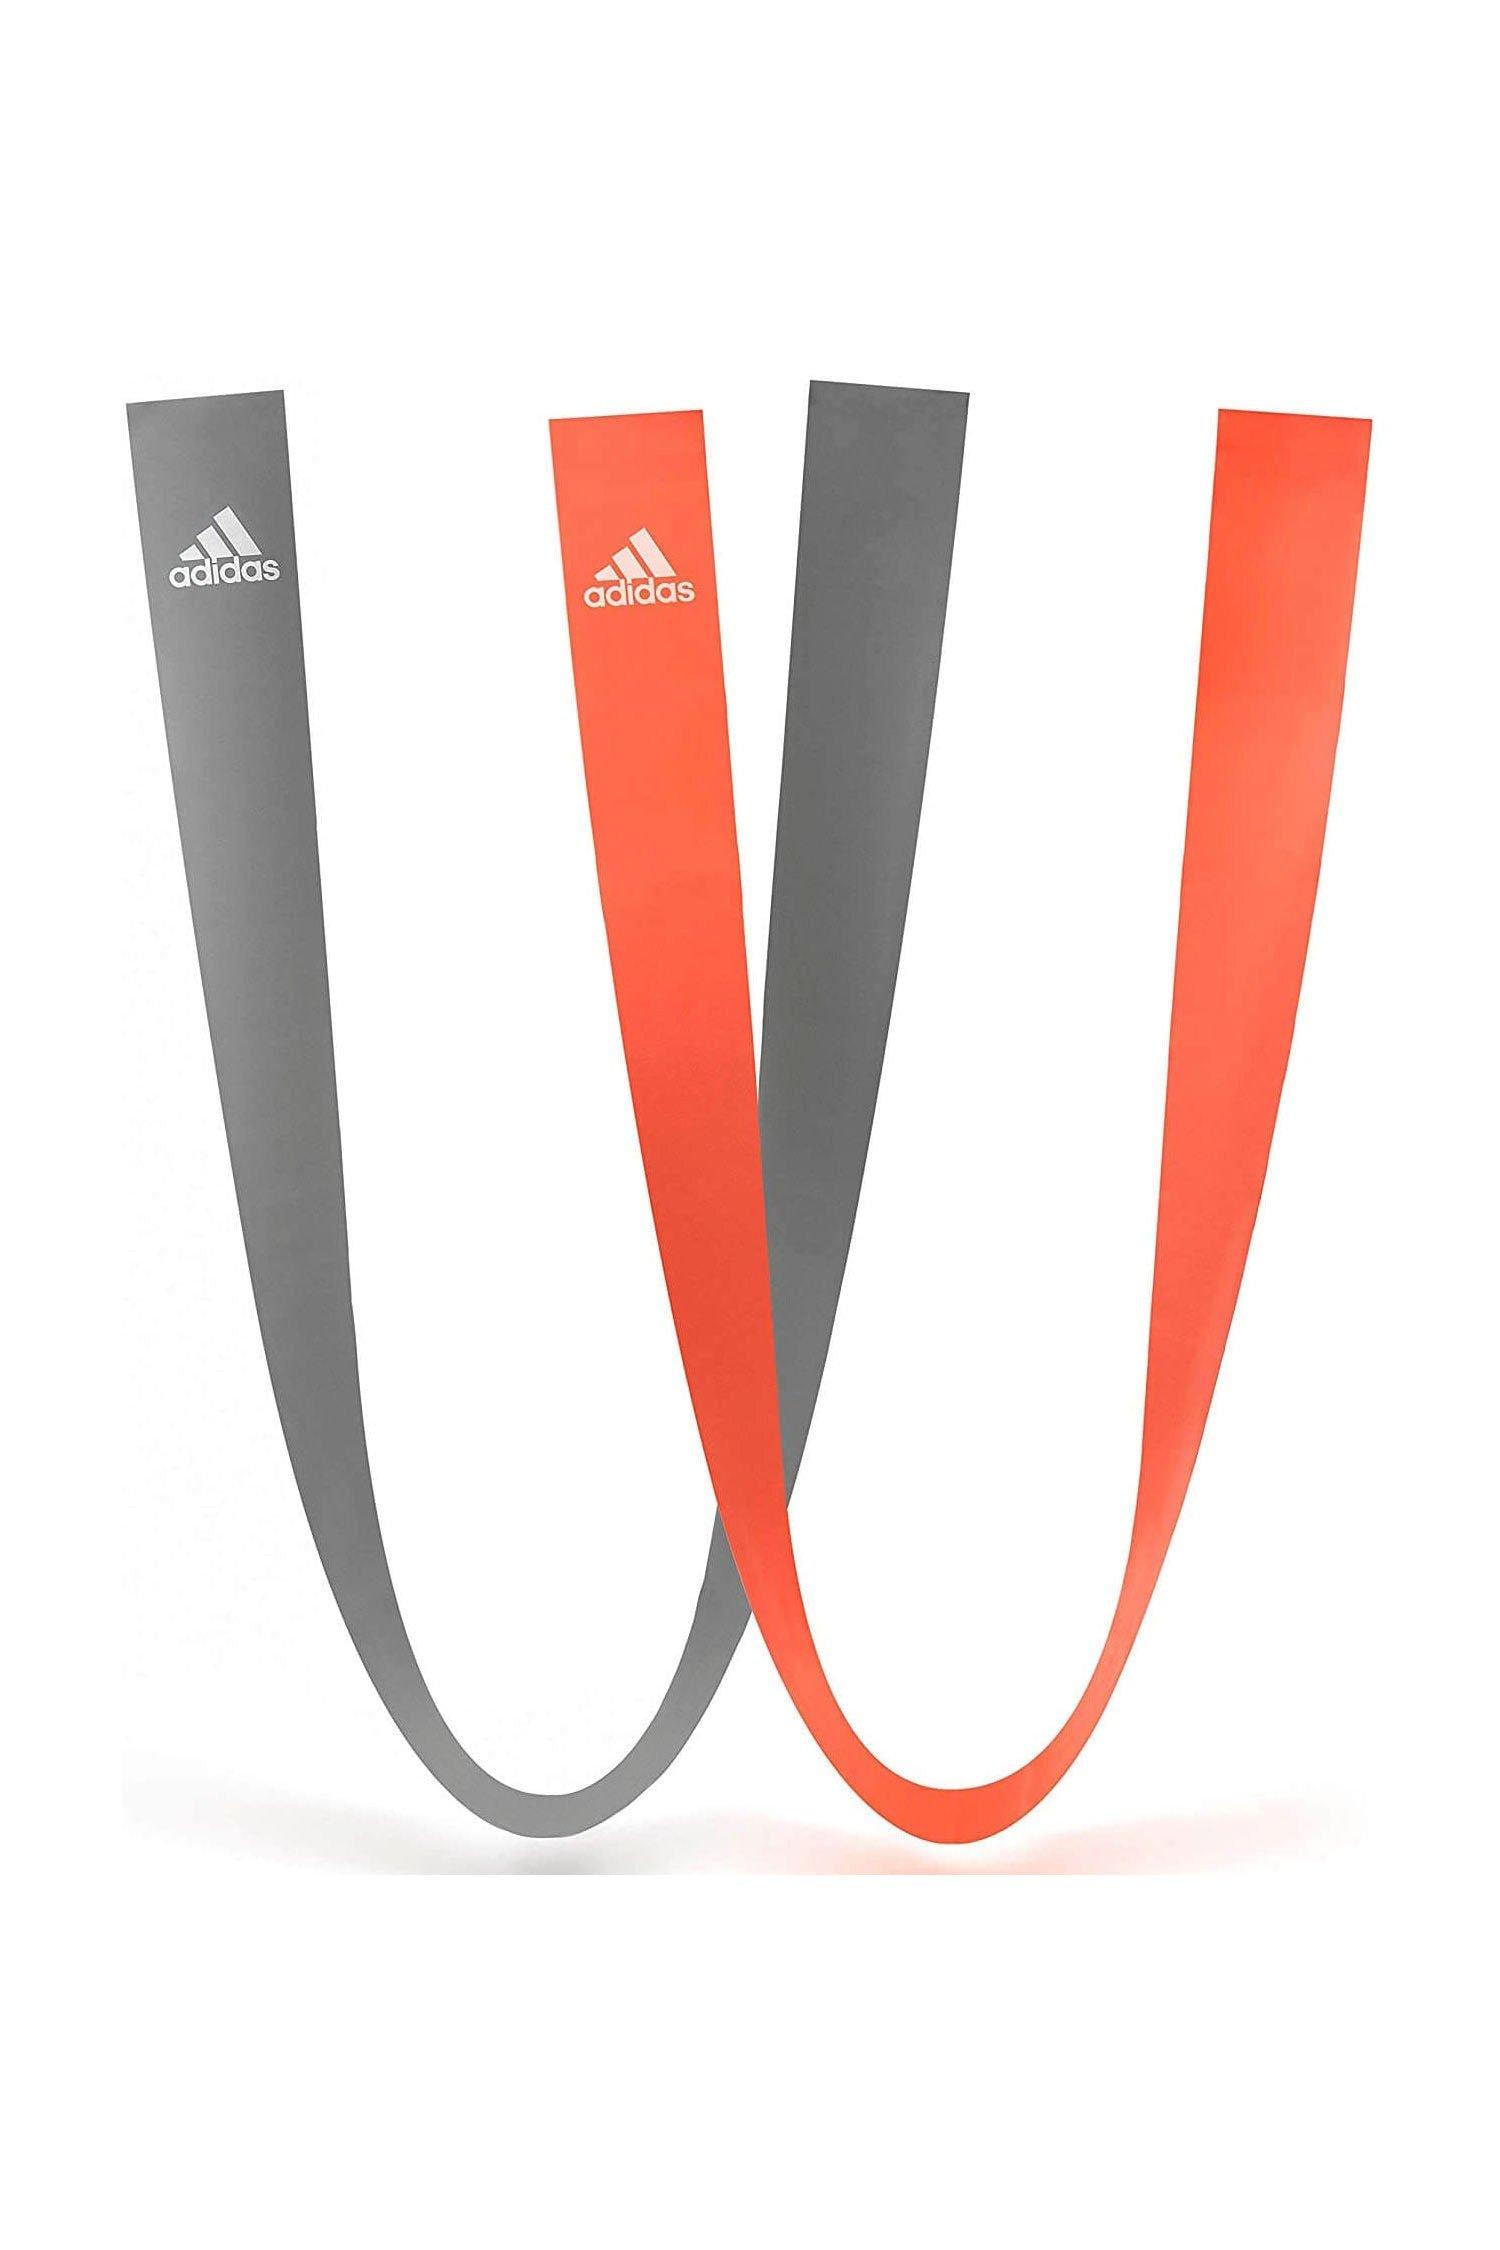 Adidas Pilates Resistance Bands Set